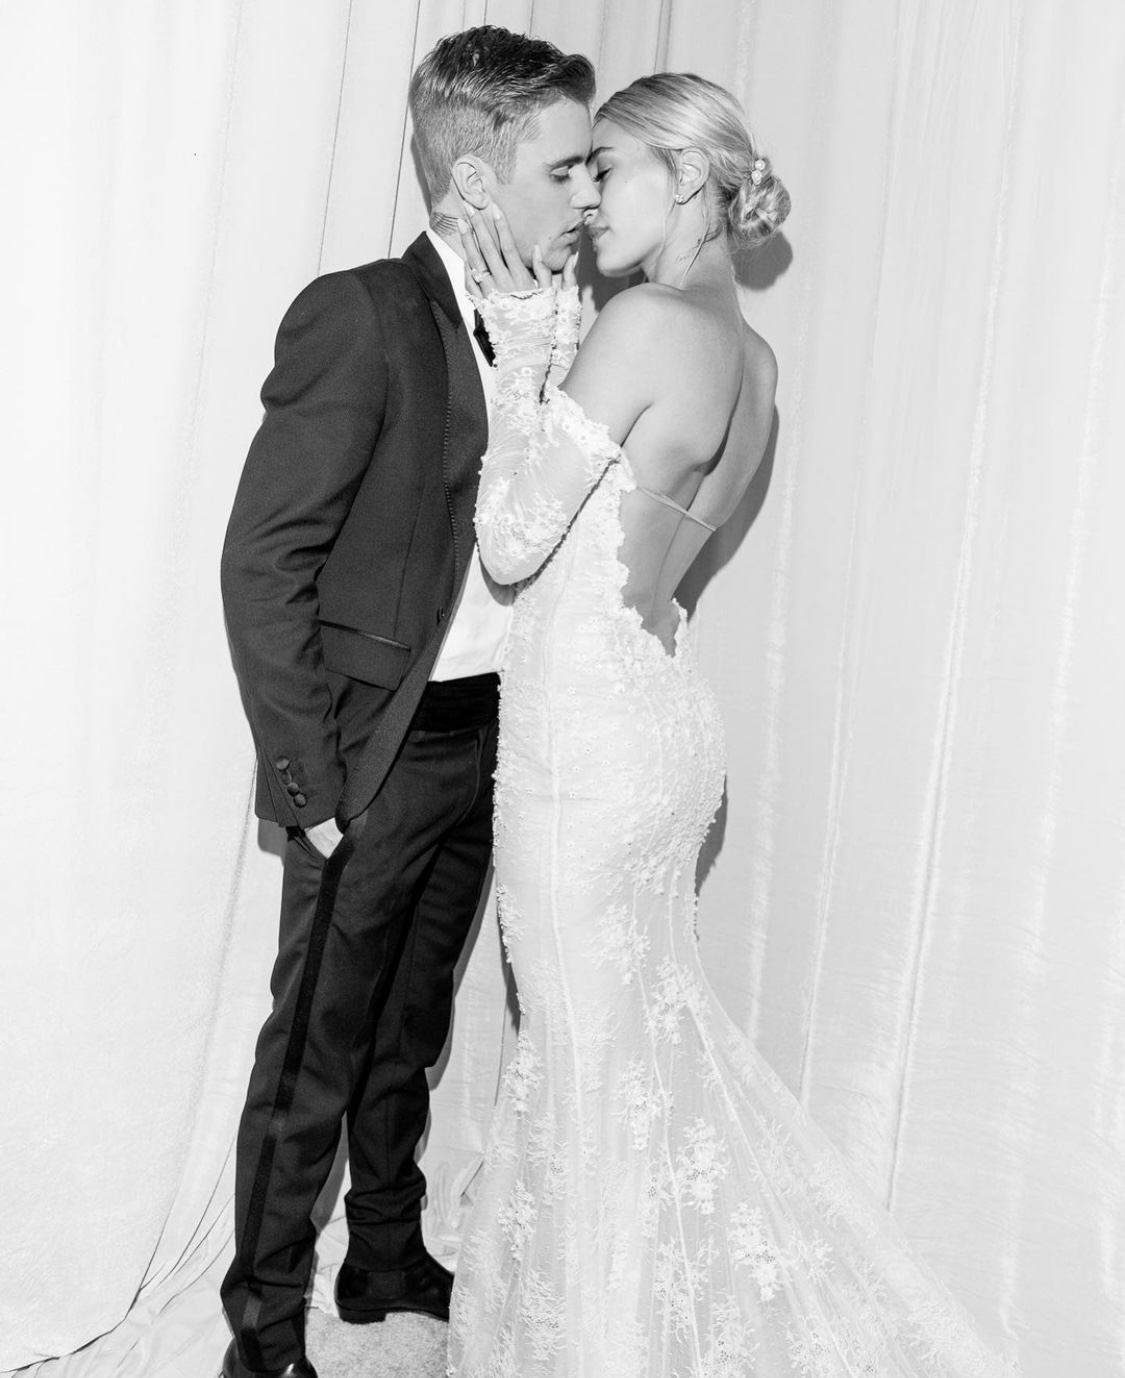 Get the Look - Hailey Bieber's Wedding Dress - Stella's Bridal